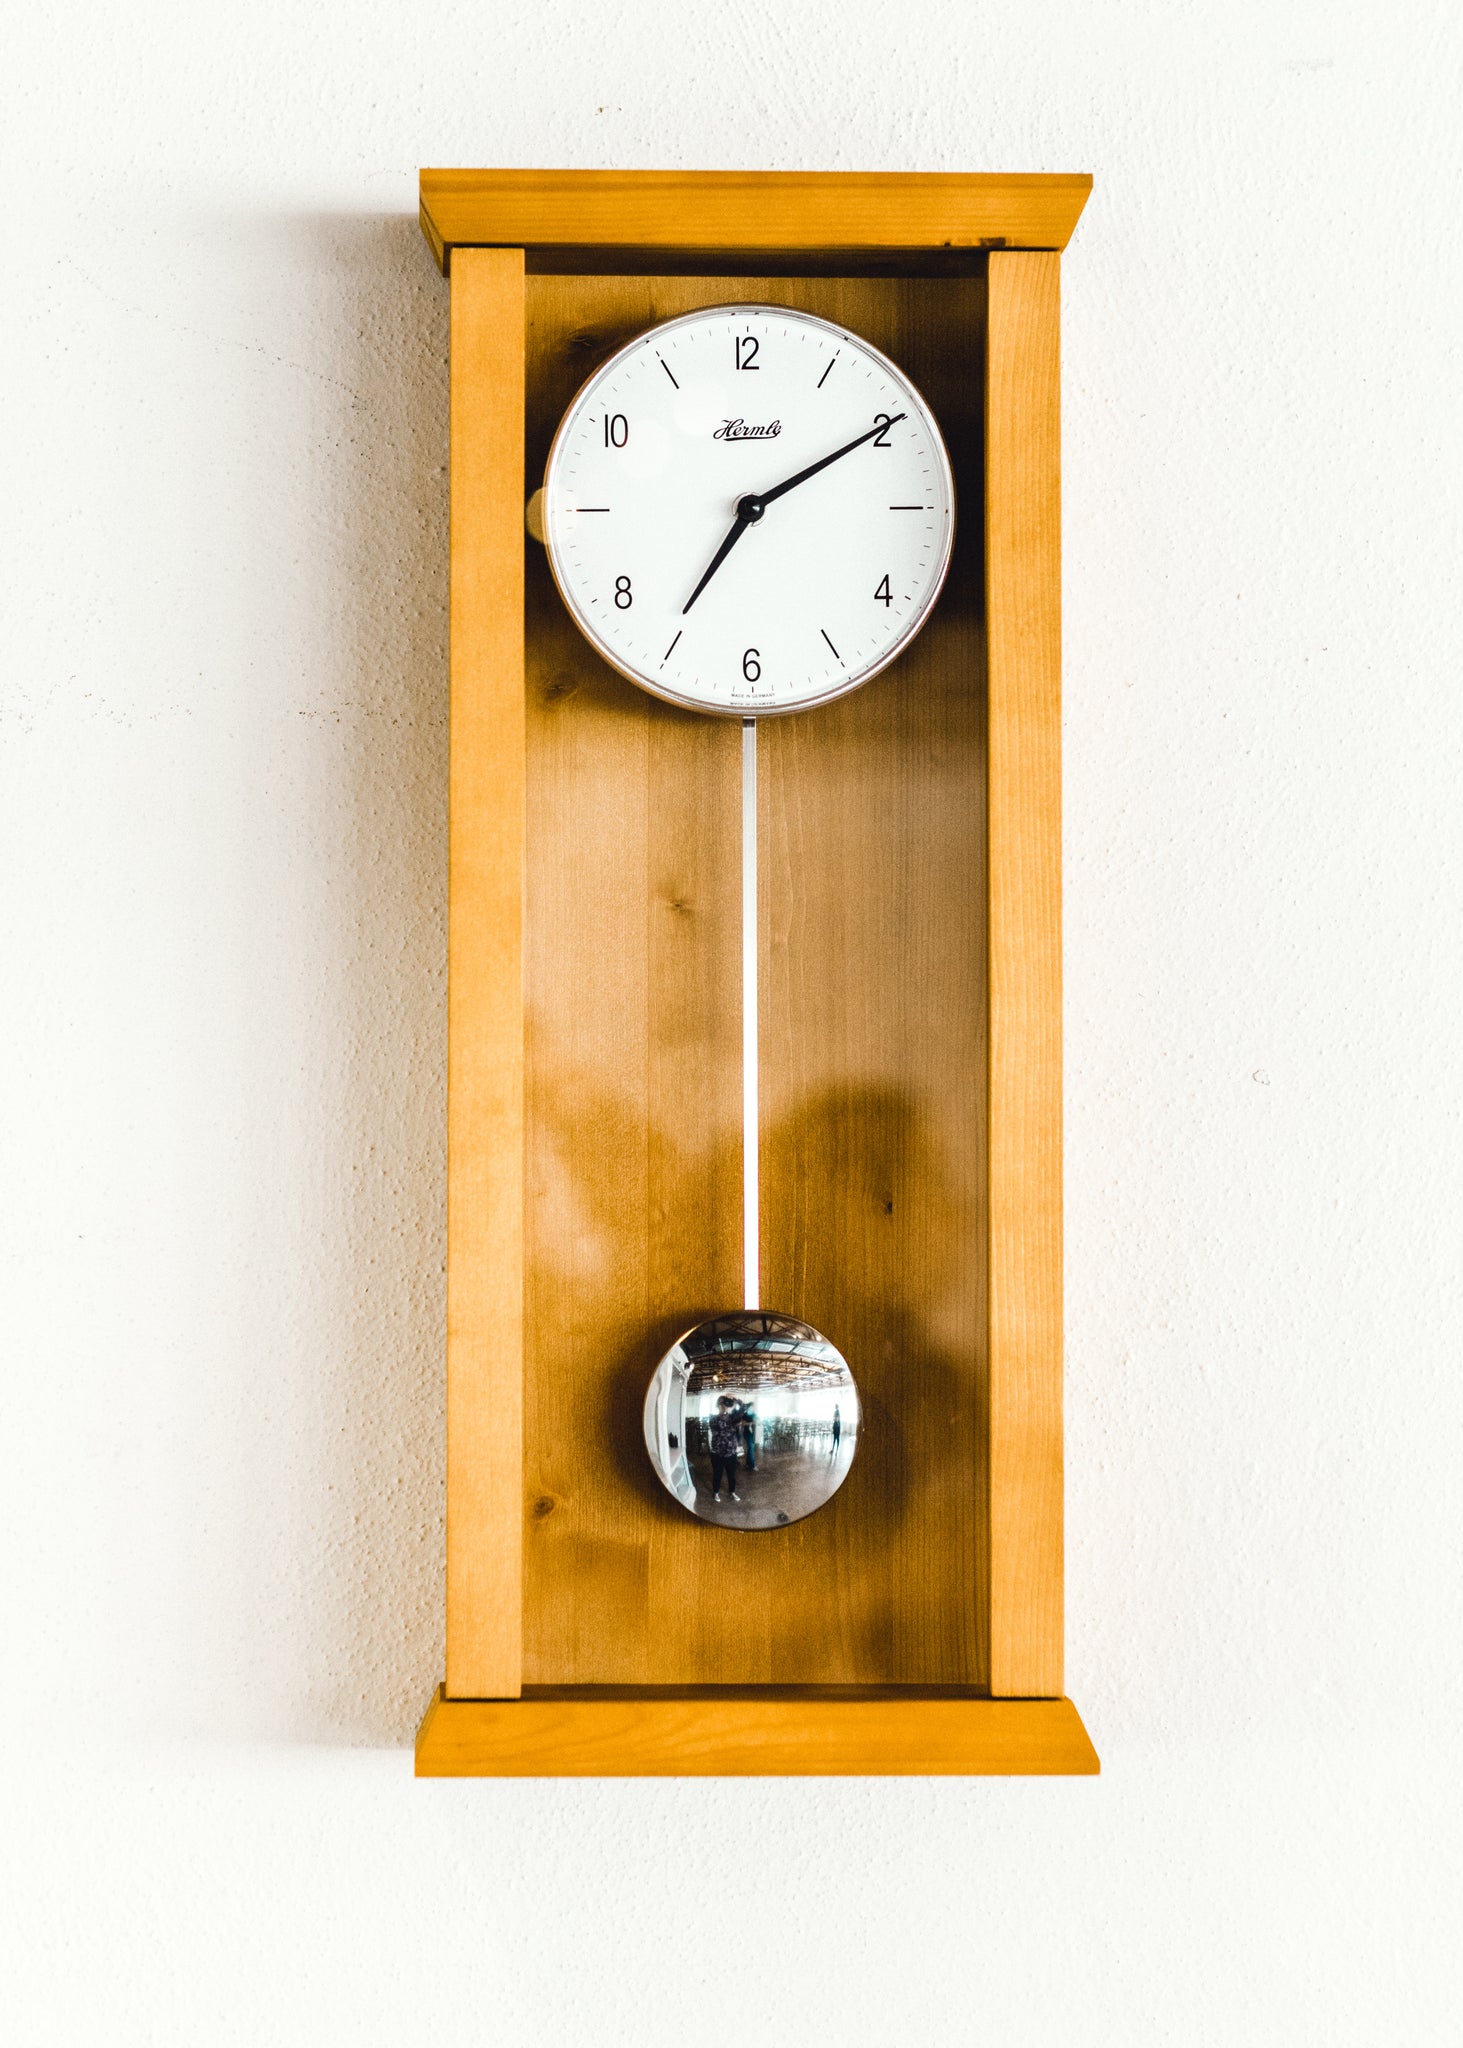 hermle-wall-clock-arden-quartz-only-pendulum-dark-oak-71002n42200